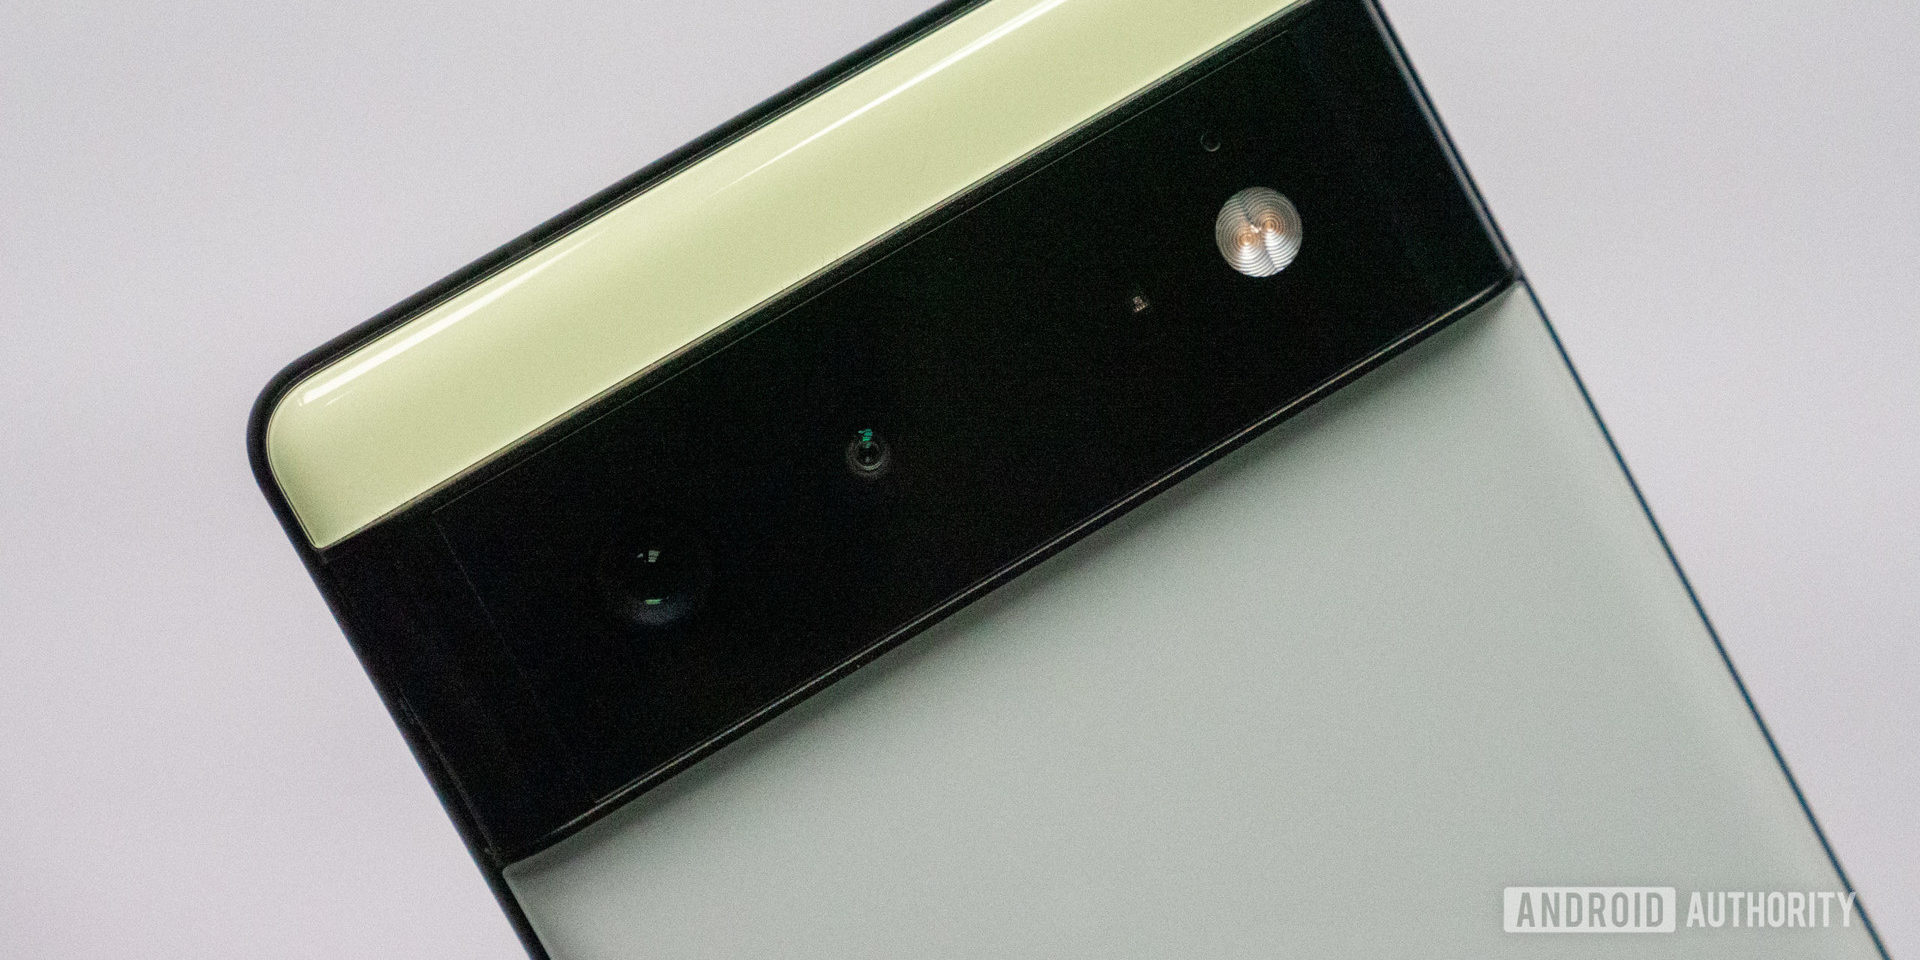 The Google Pixel 6 in Sorta Seafoam color camera bar up close